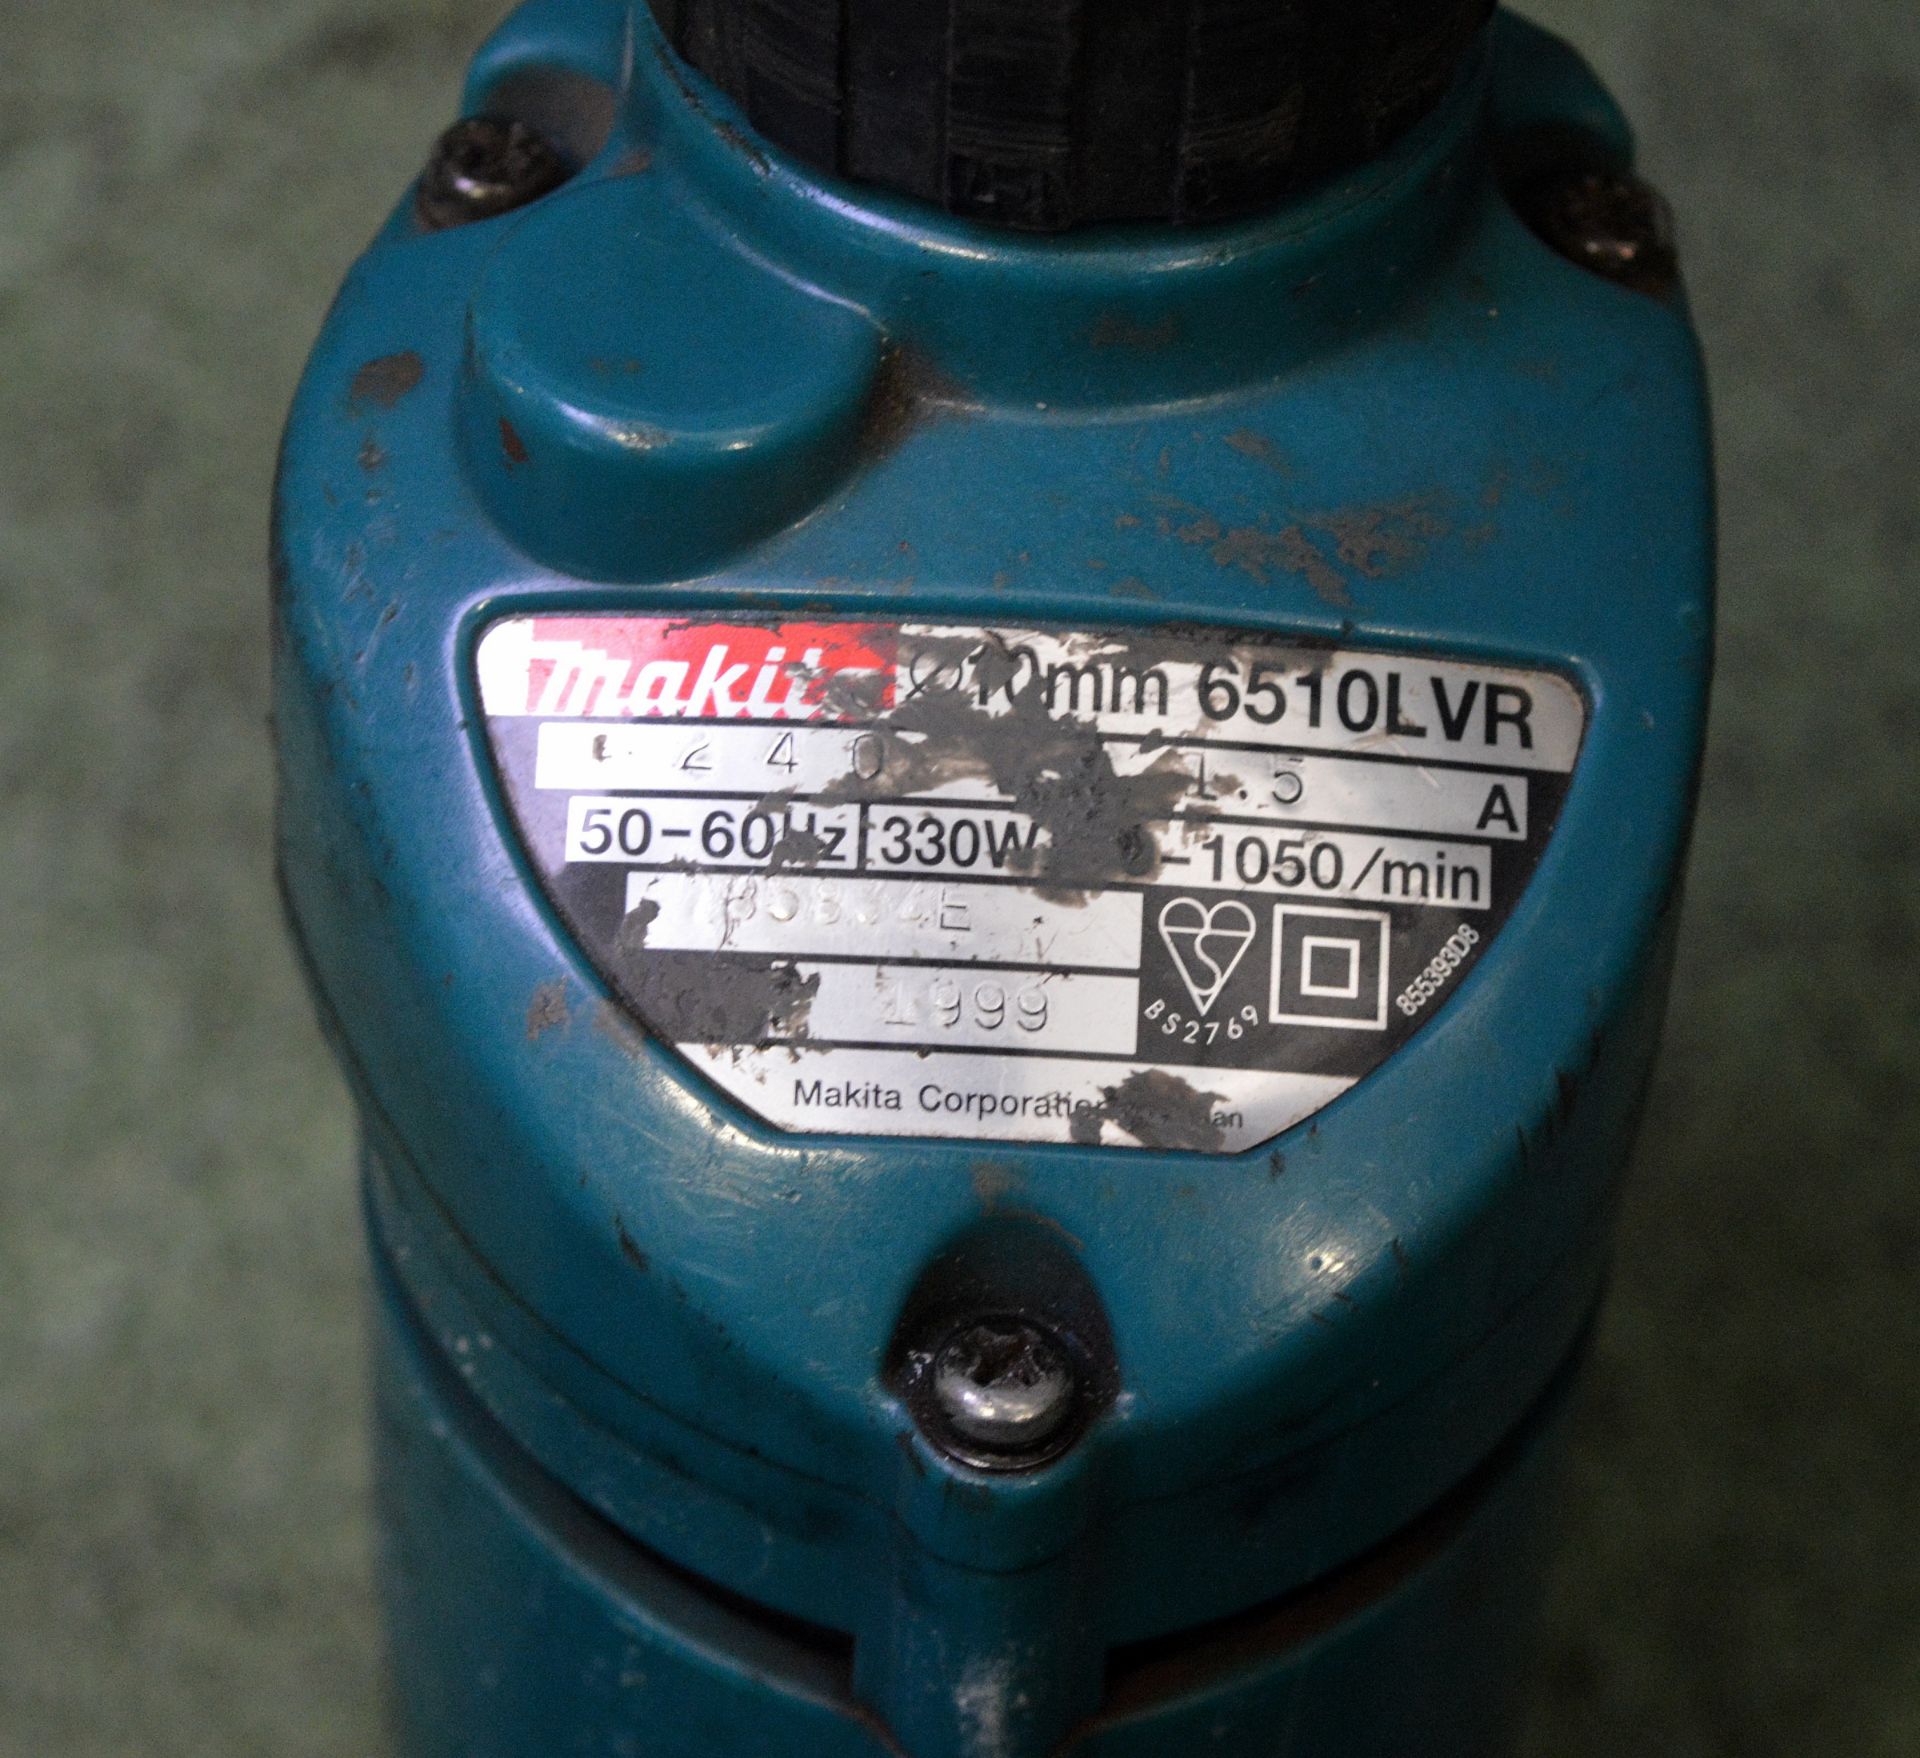 3x Makita 6510LVR Portable Electric Drills - 240v - Image 2 of 4